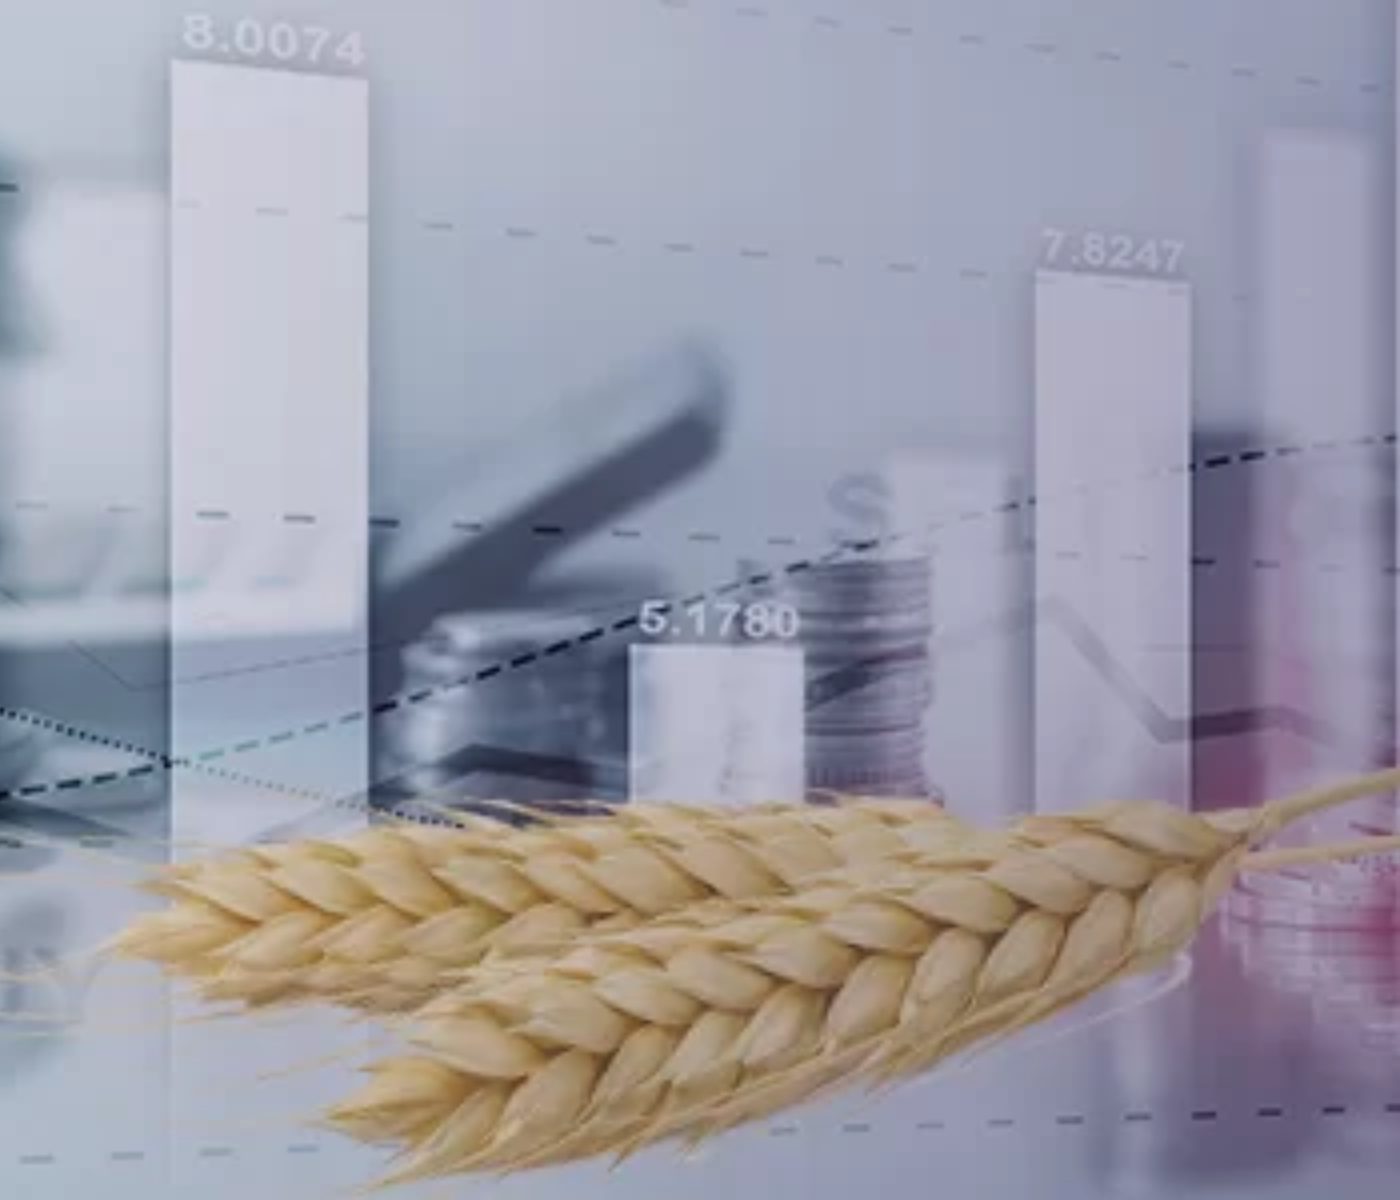 Assessing Global Grain Market Challenges